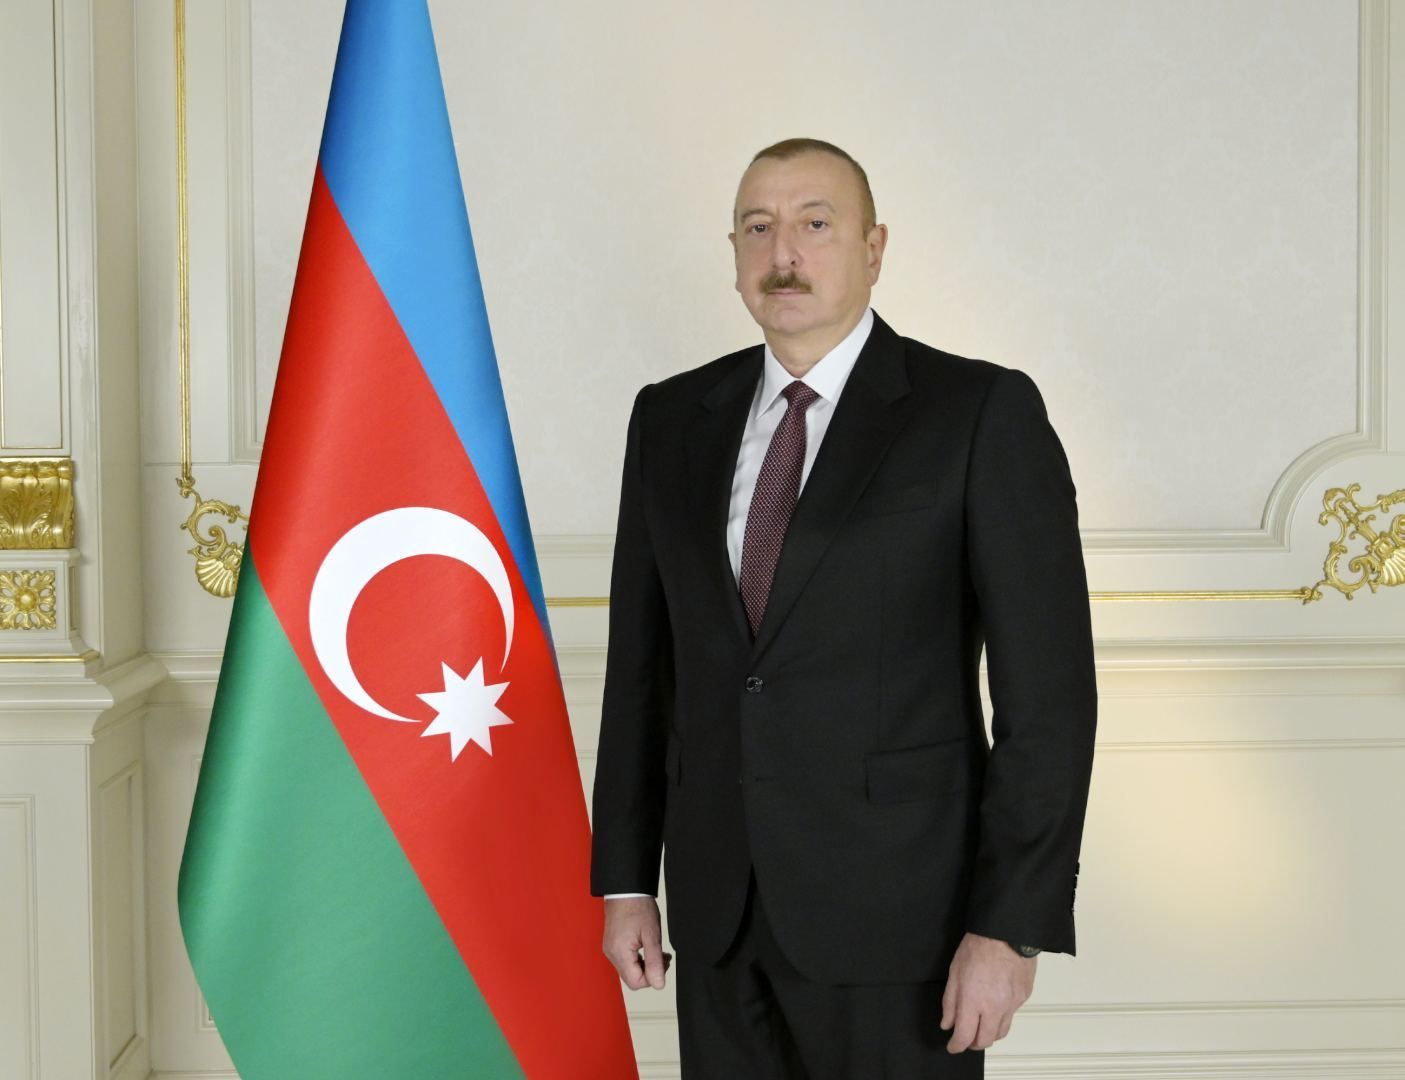 Azerbaijani President makes post on anniversary of Khojaly genocide [PHOTO]